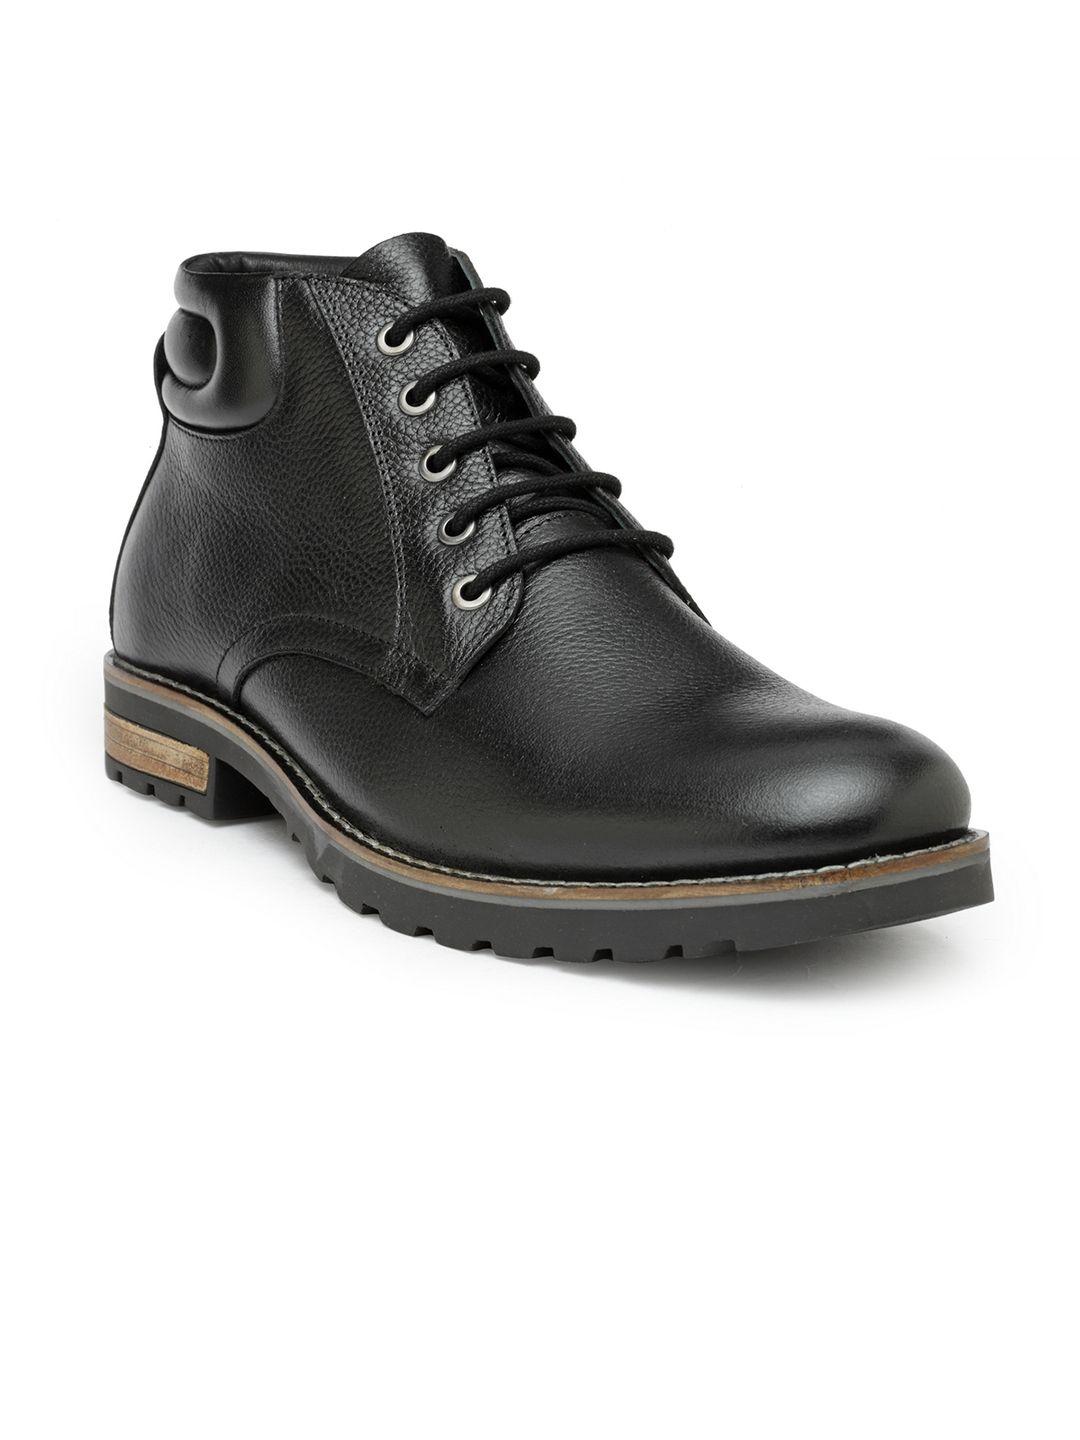 teakwood leathers men black solid leather mid-top flat boots